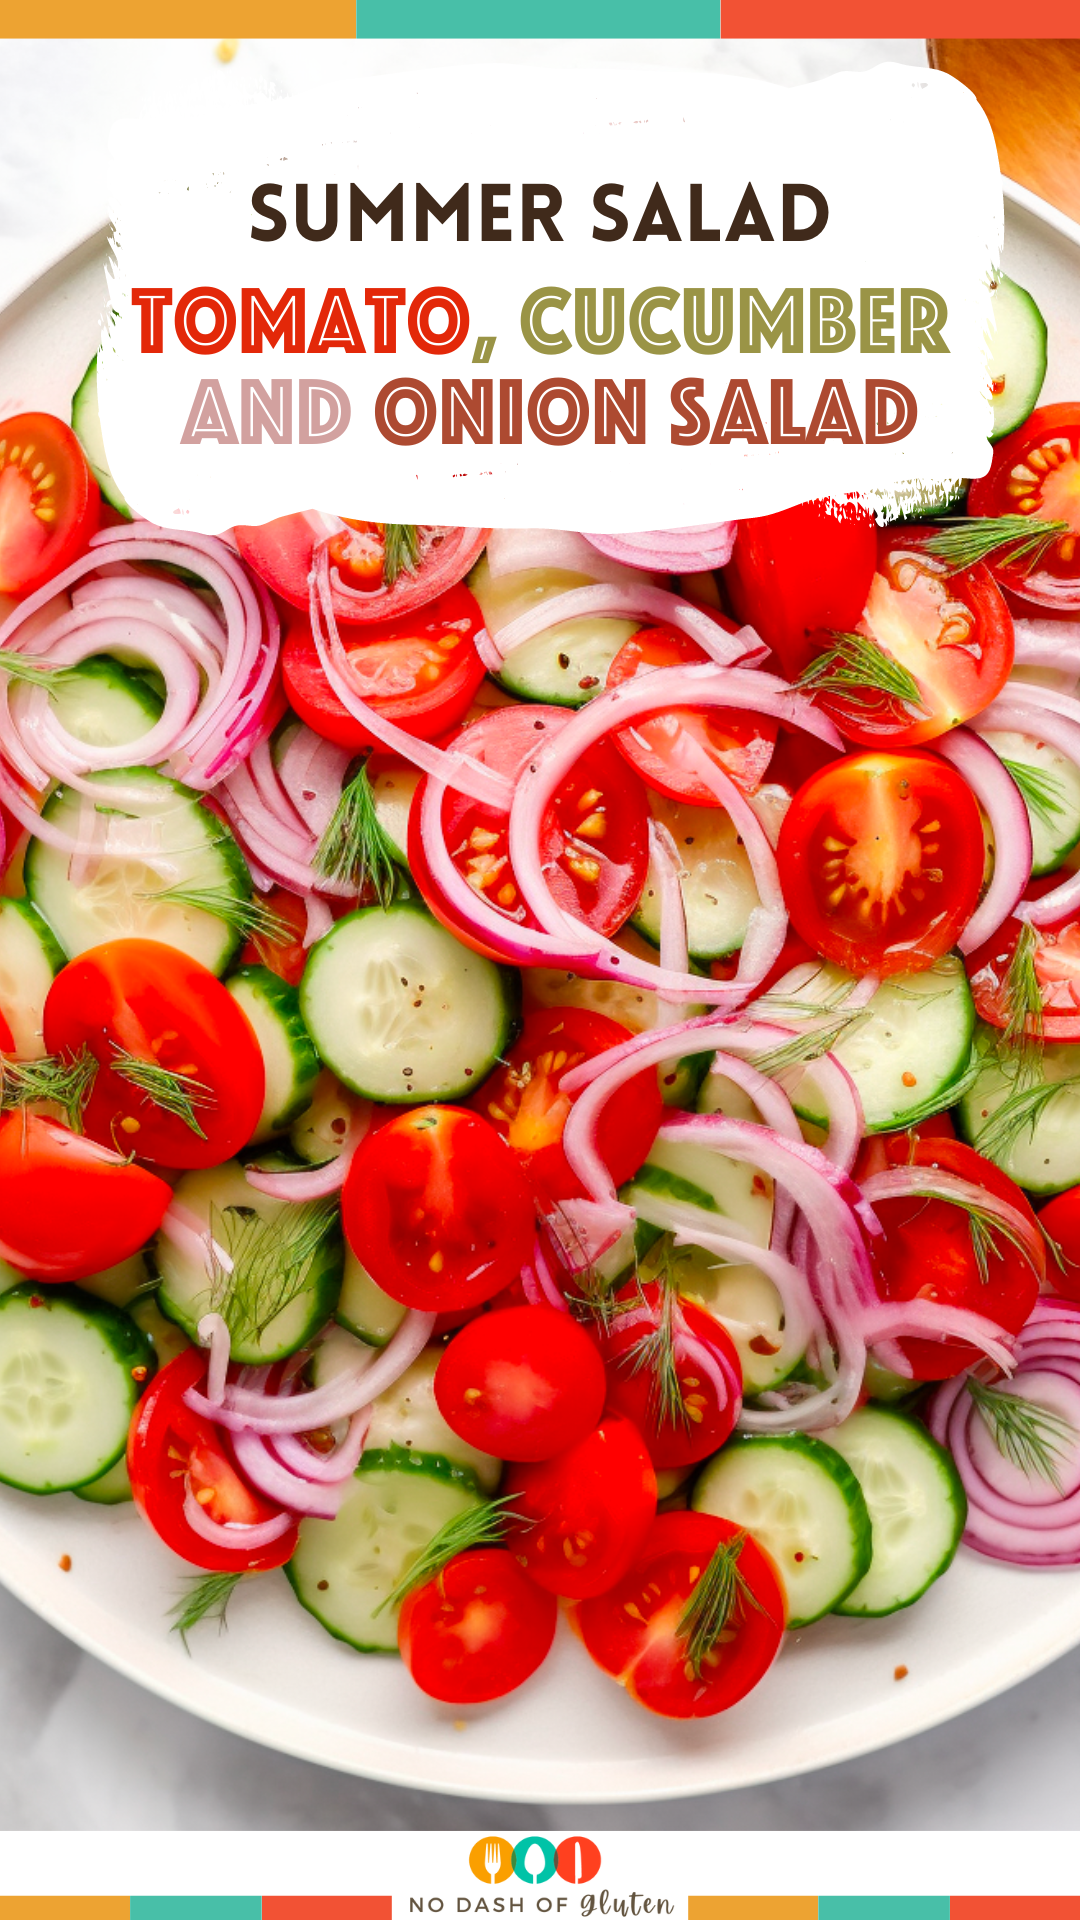 Tomato, Cucumber and Onion Salad